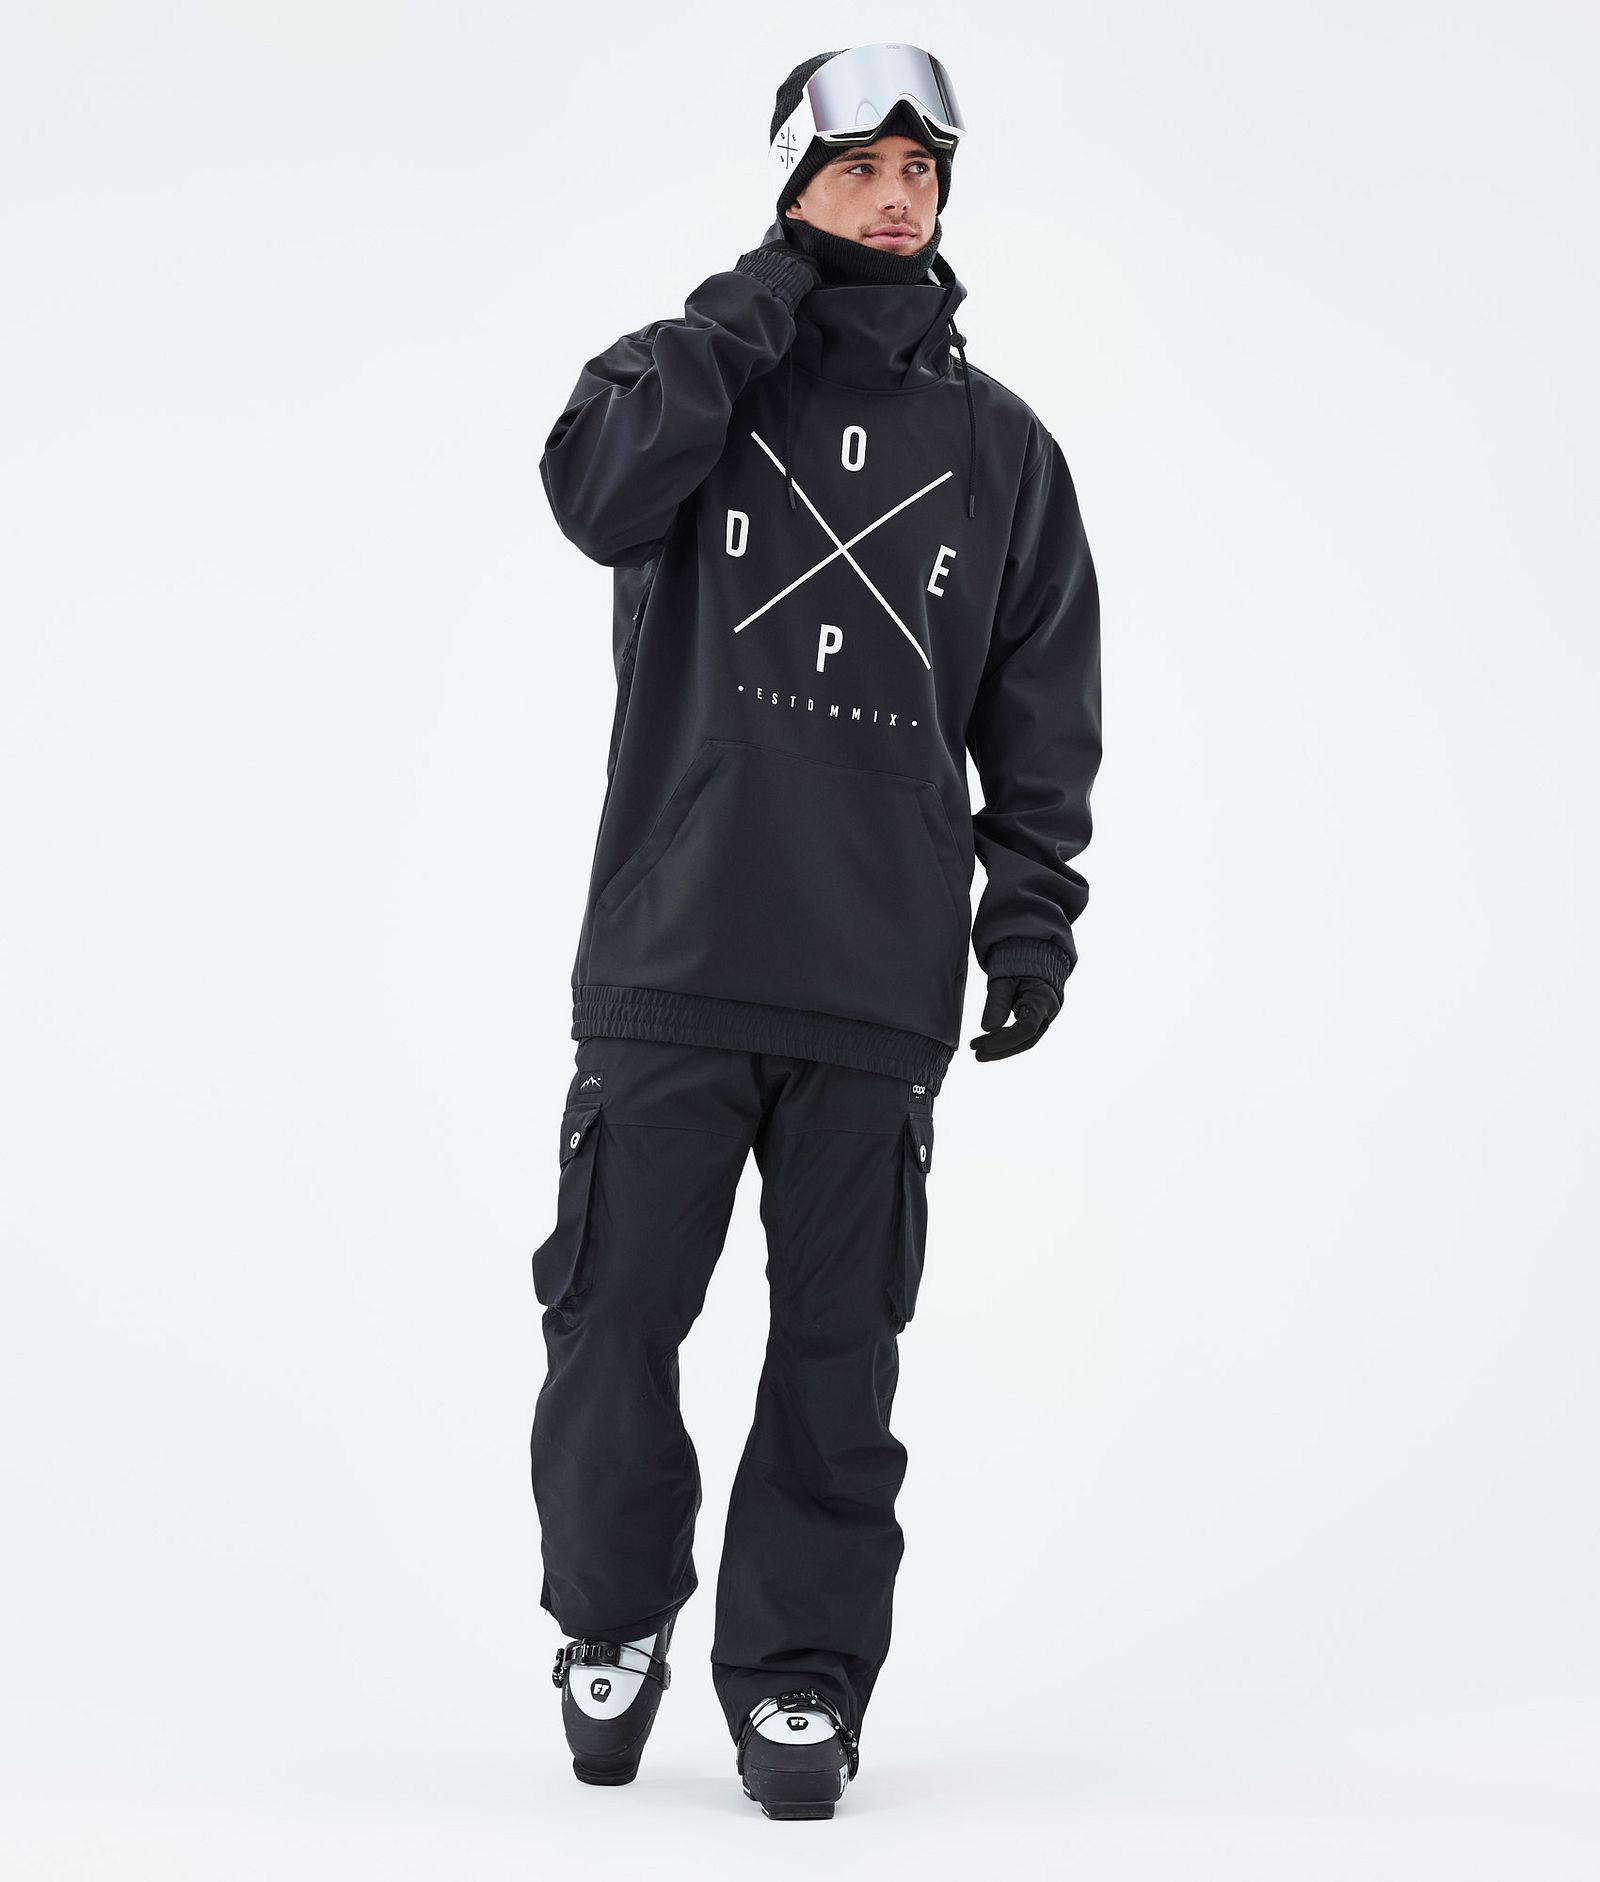 Yeti スキーウェアセット メンズ Black/Black